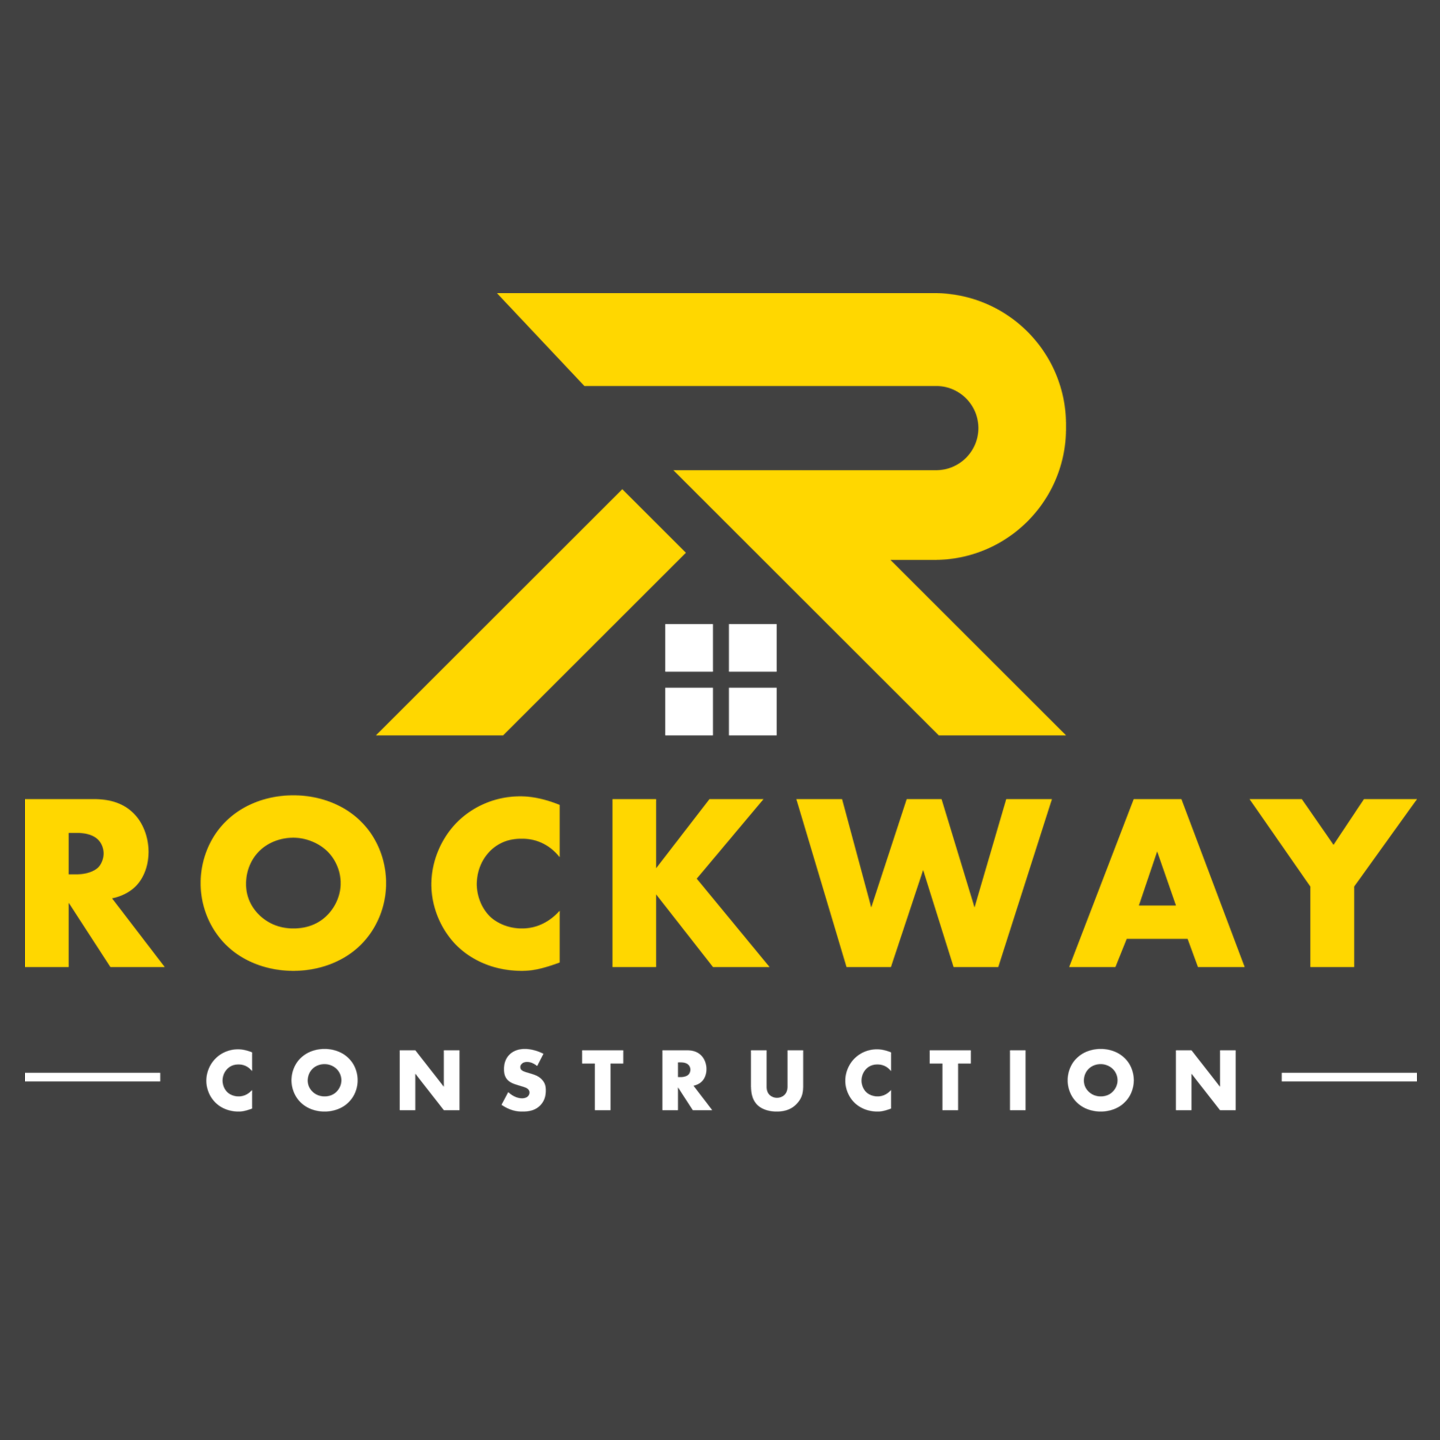 Rockway Construction's logo